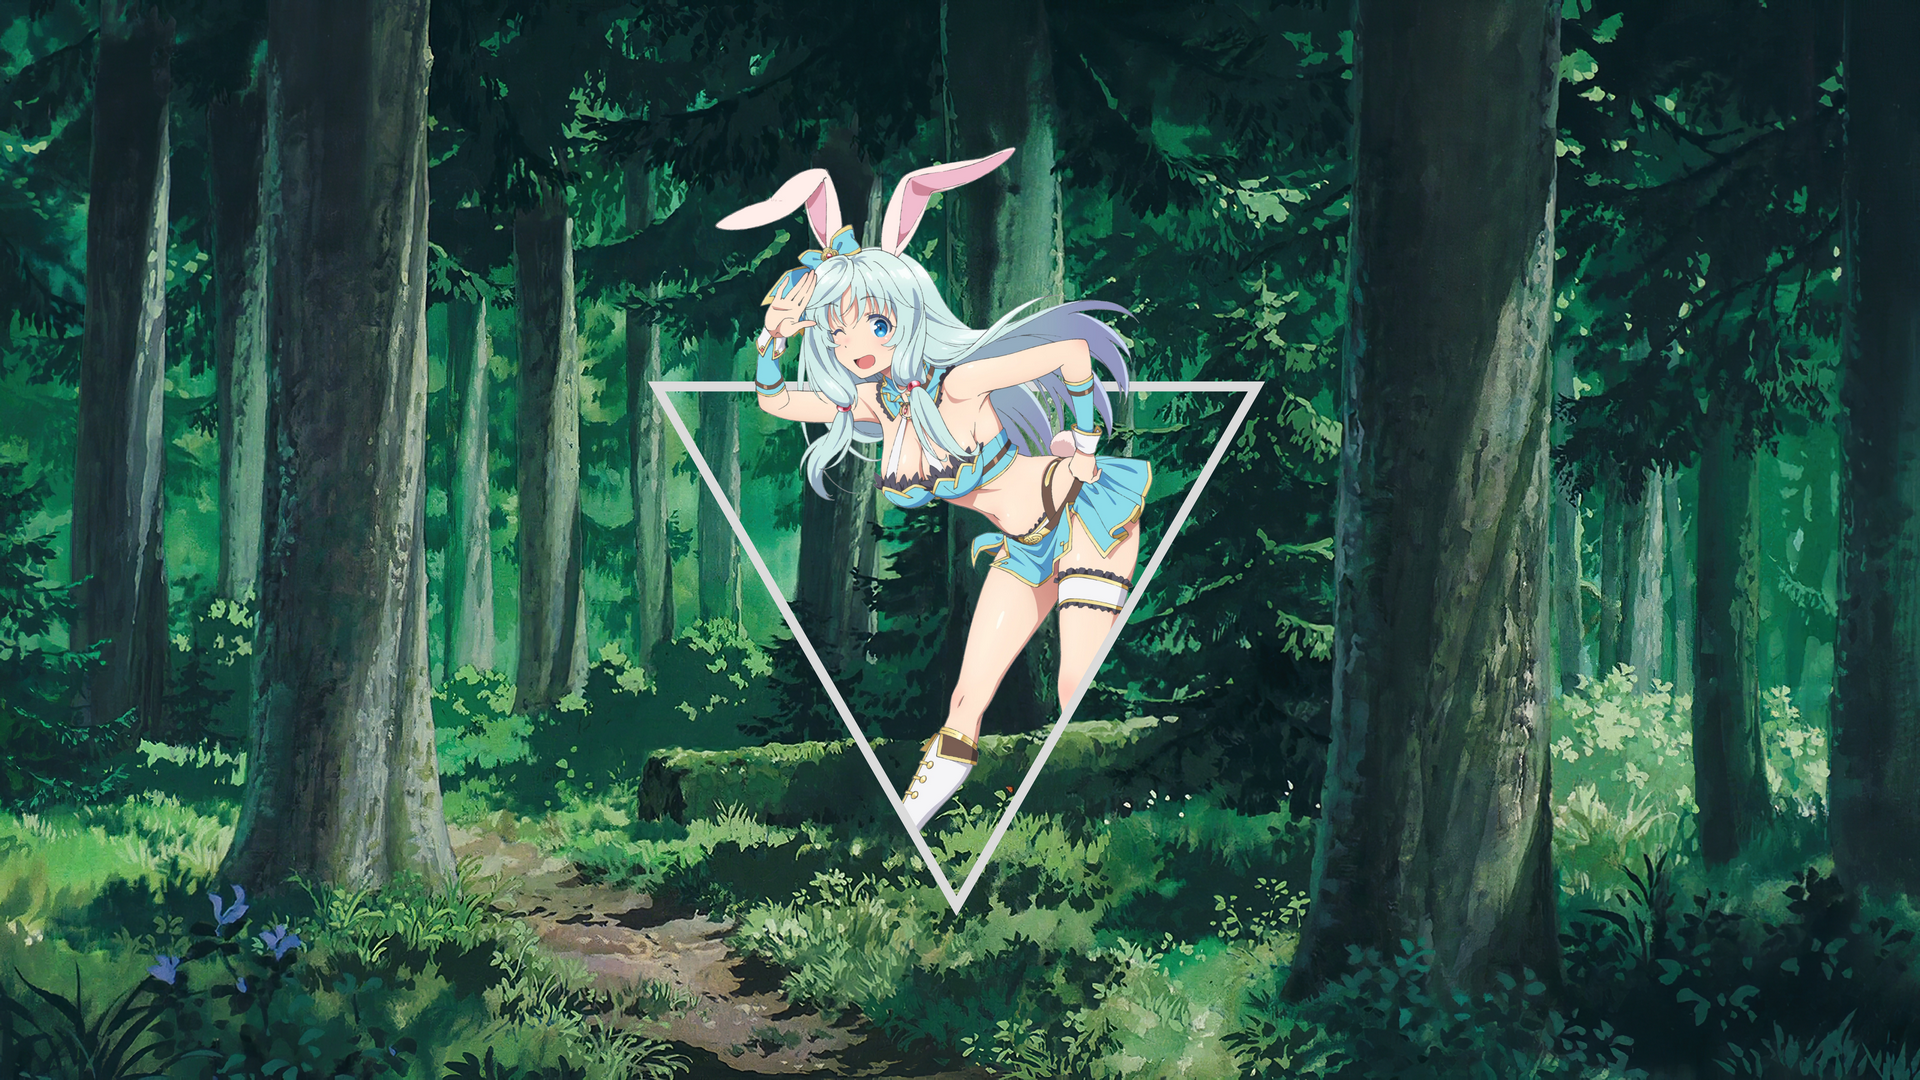 Anime 1920x1080 forest Arifureta picture-in-picture bunny girl Shea Haulia